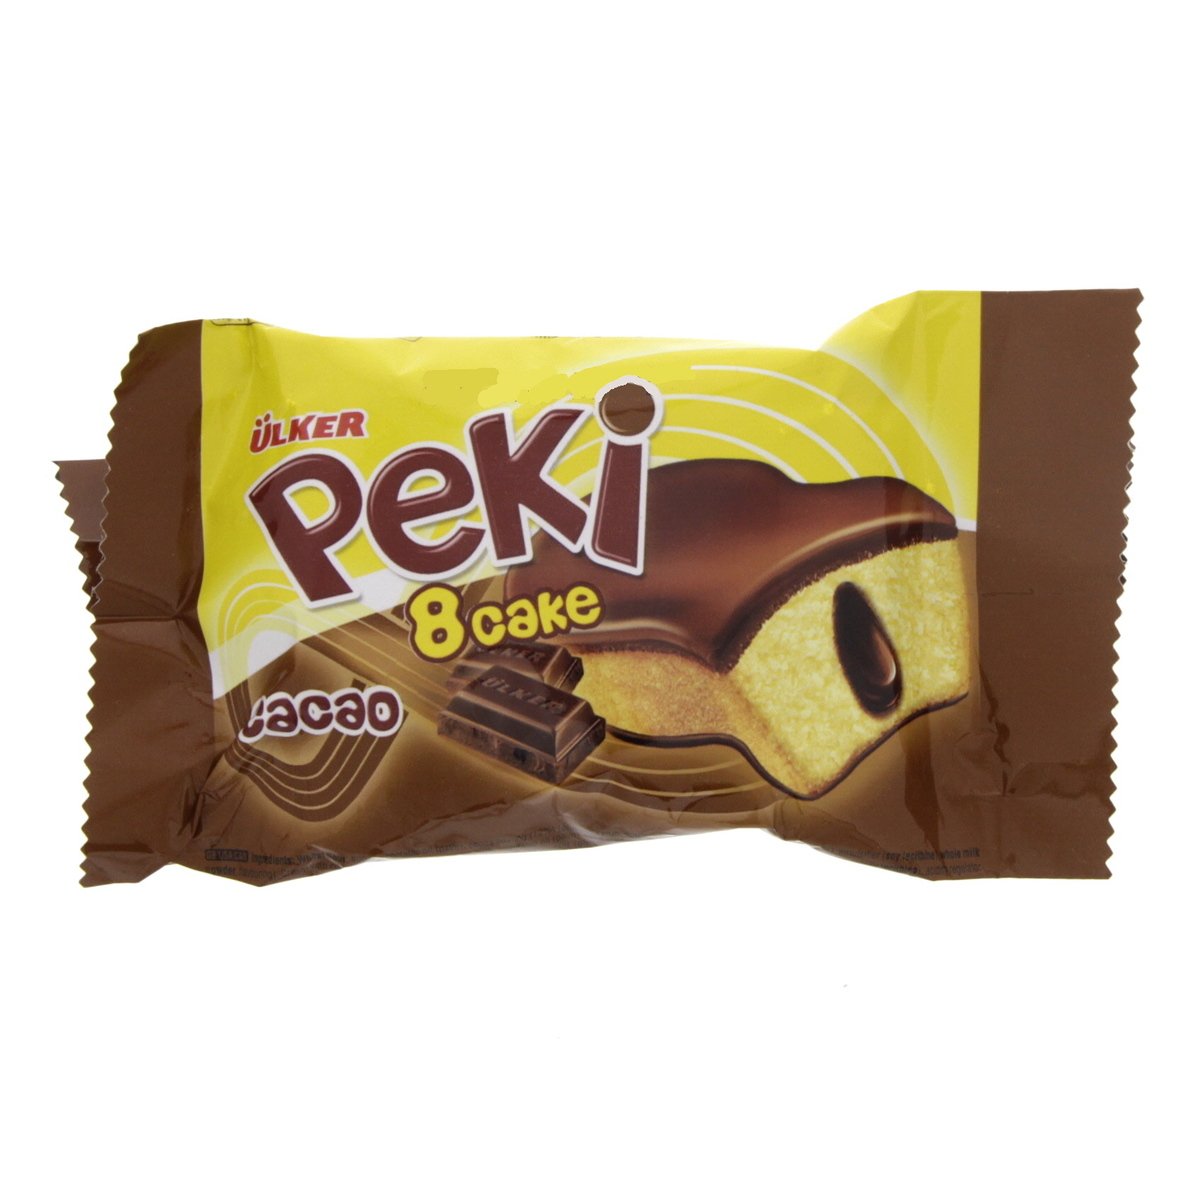 Ulker Peki Cacao 8 Cake 40 g